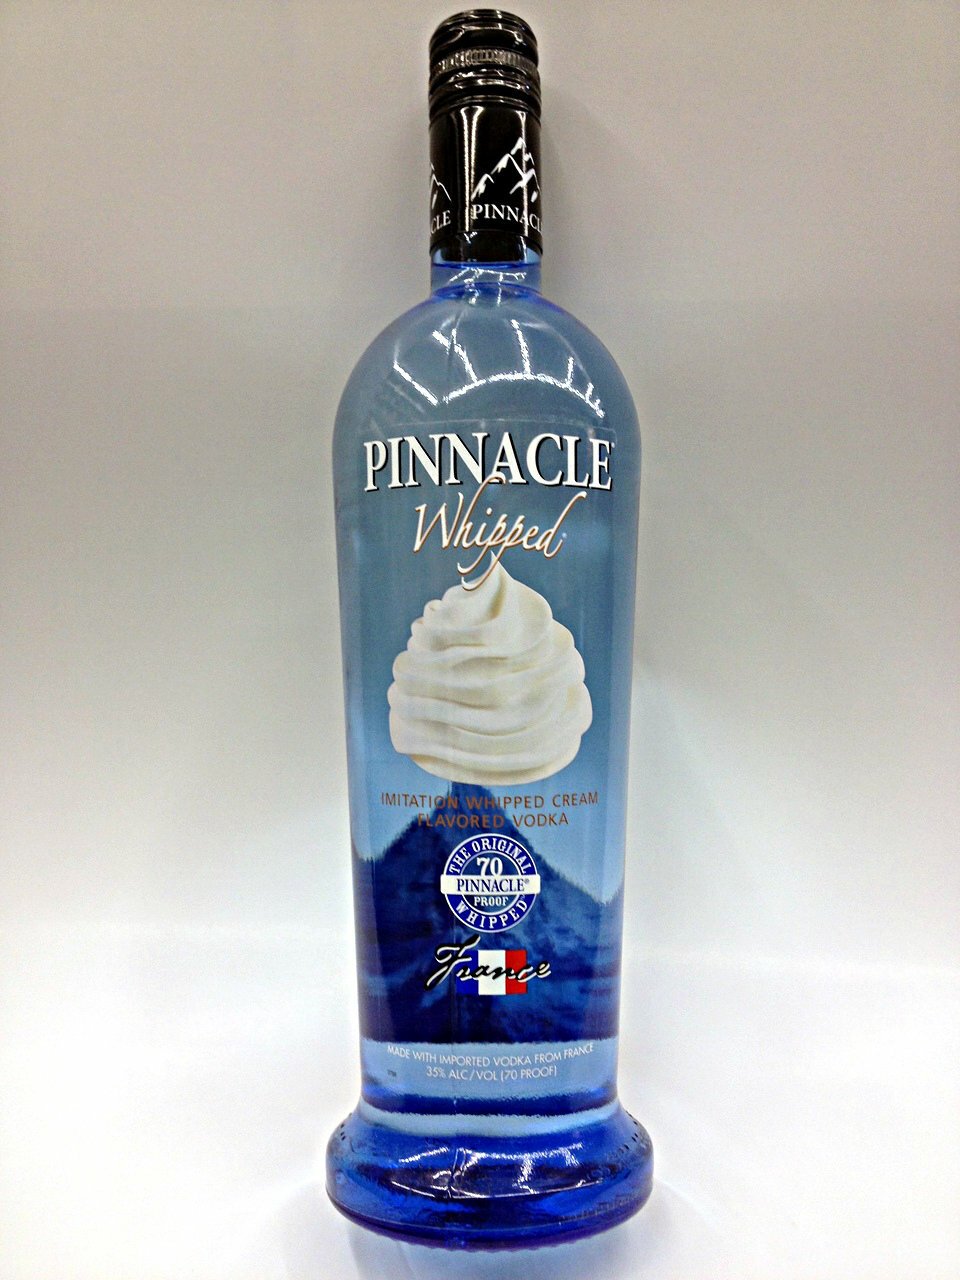 Pinnacle Whipped Cream French Vodka